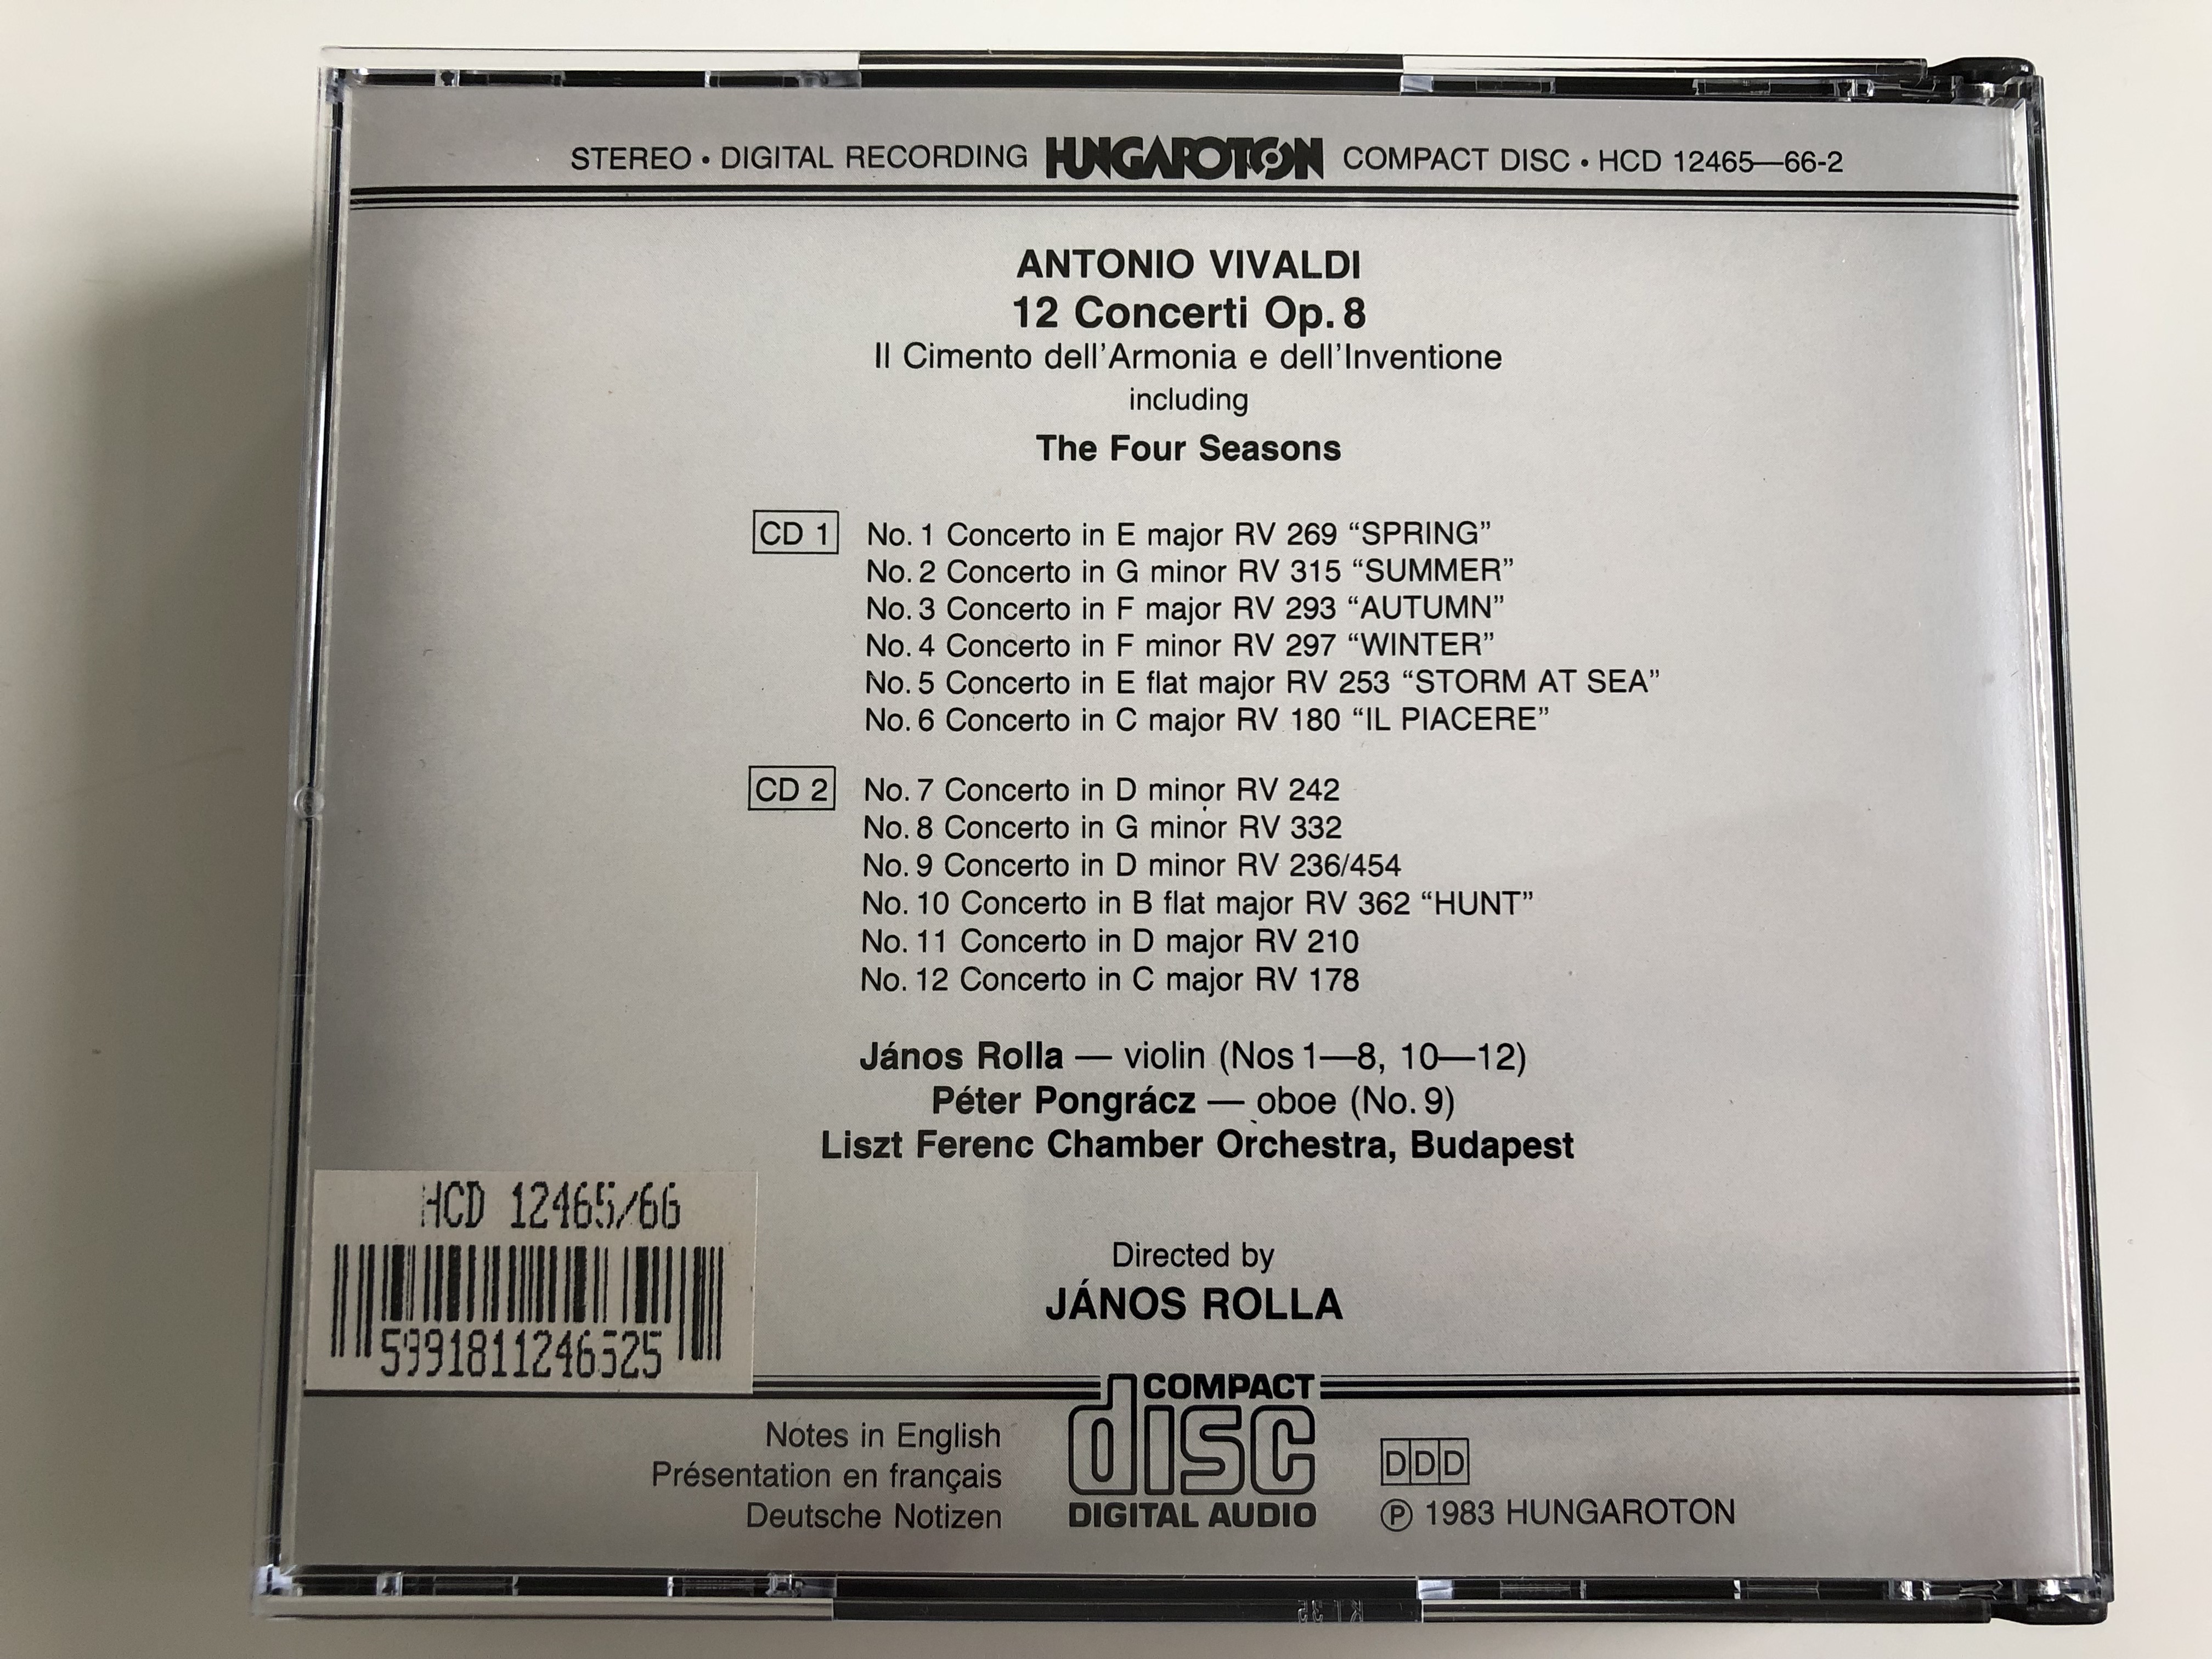 vivaldi-12-concerti-op.-8-il-cimento-dell-armonia-e-dell-inventione-including-the-four-seasons-liszt-ferenc-chamber-orchestra-budipest-directed-by-janos-rolla-hungaroton-2x-audio-cd-15-.jpg